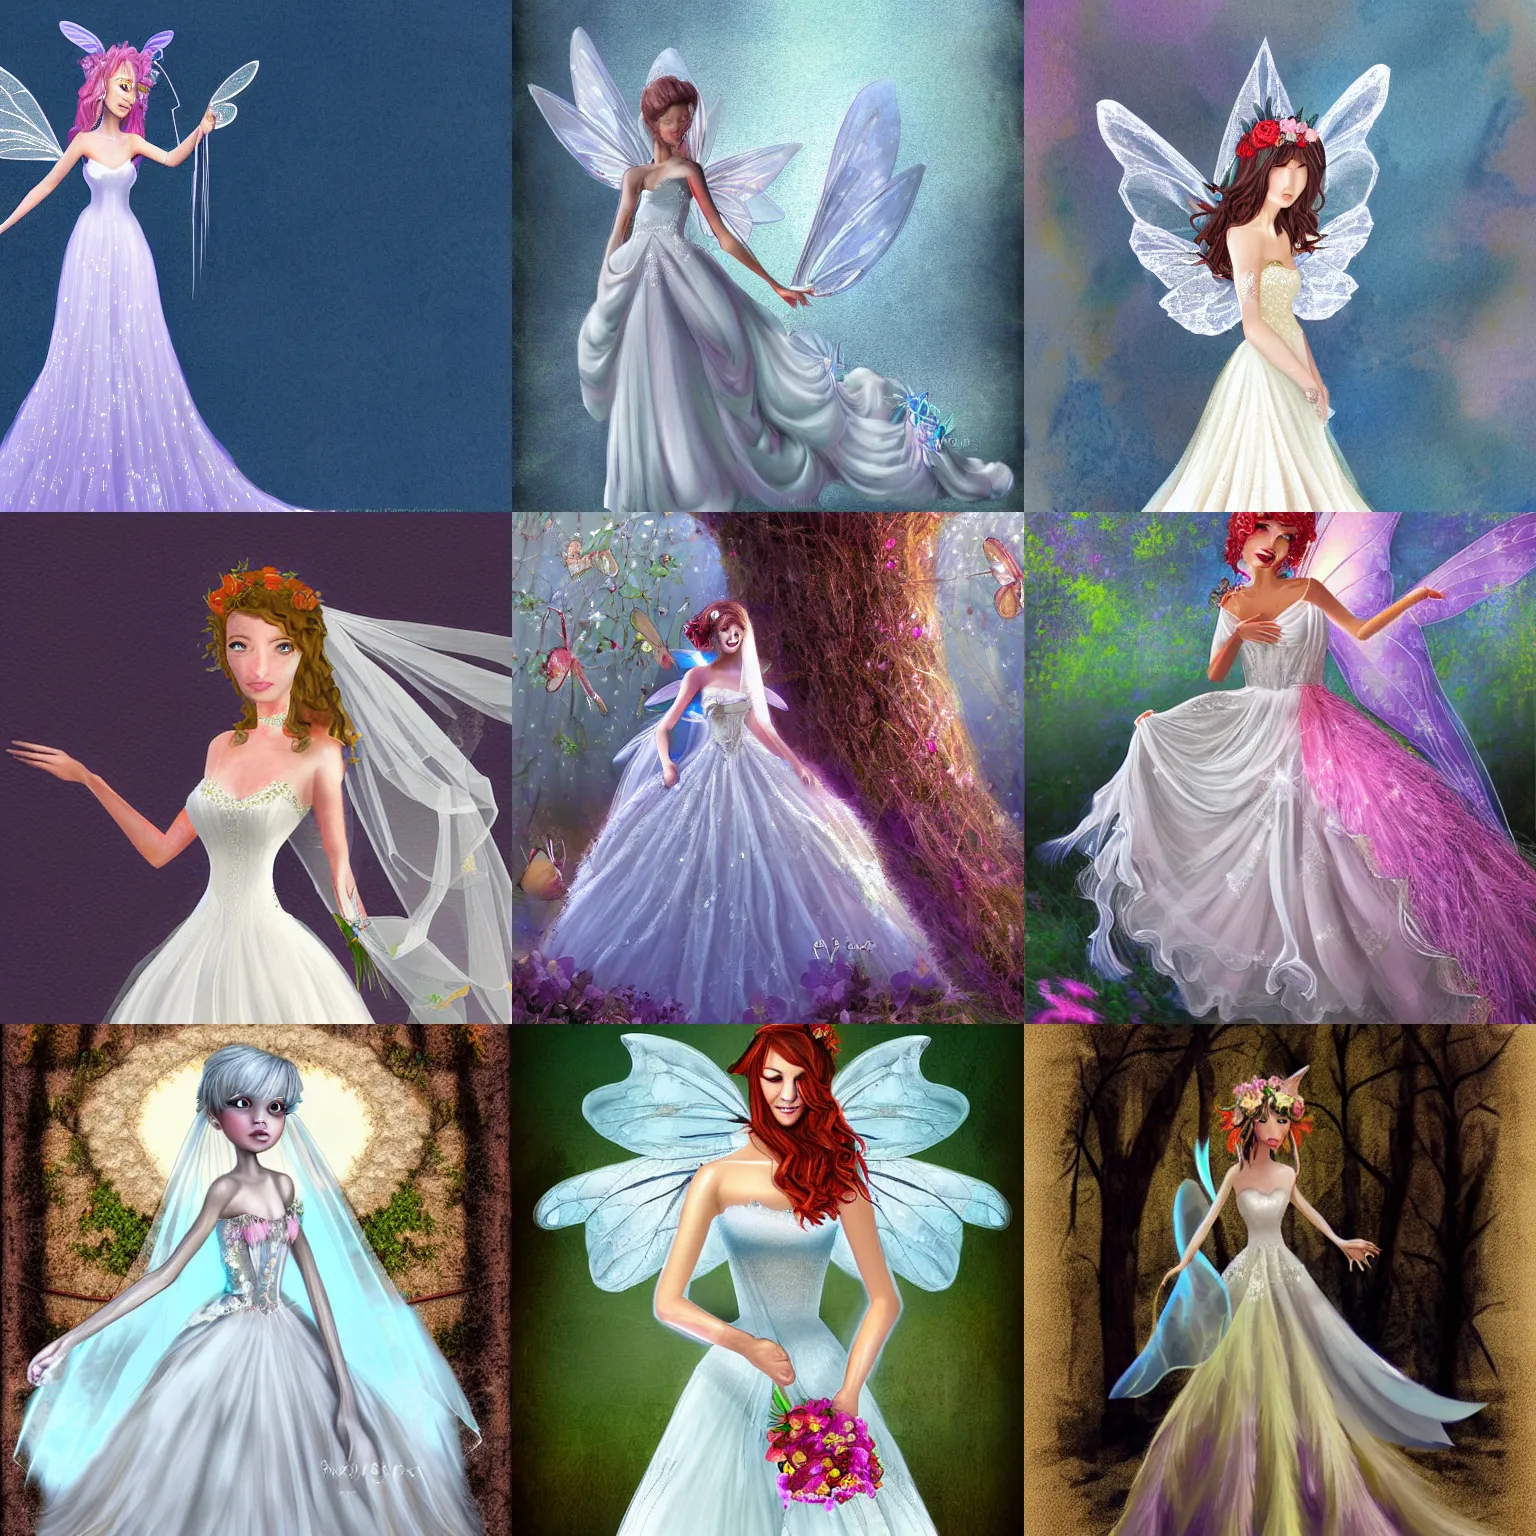 Prompt: fairy lady in a wedding dress, digital art